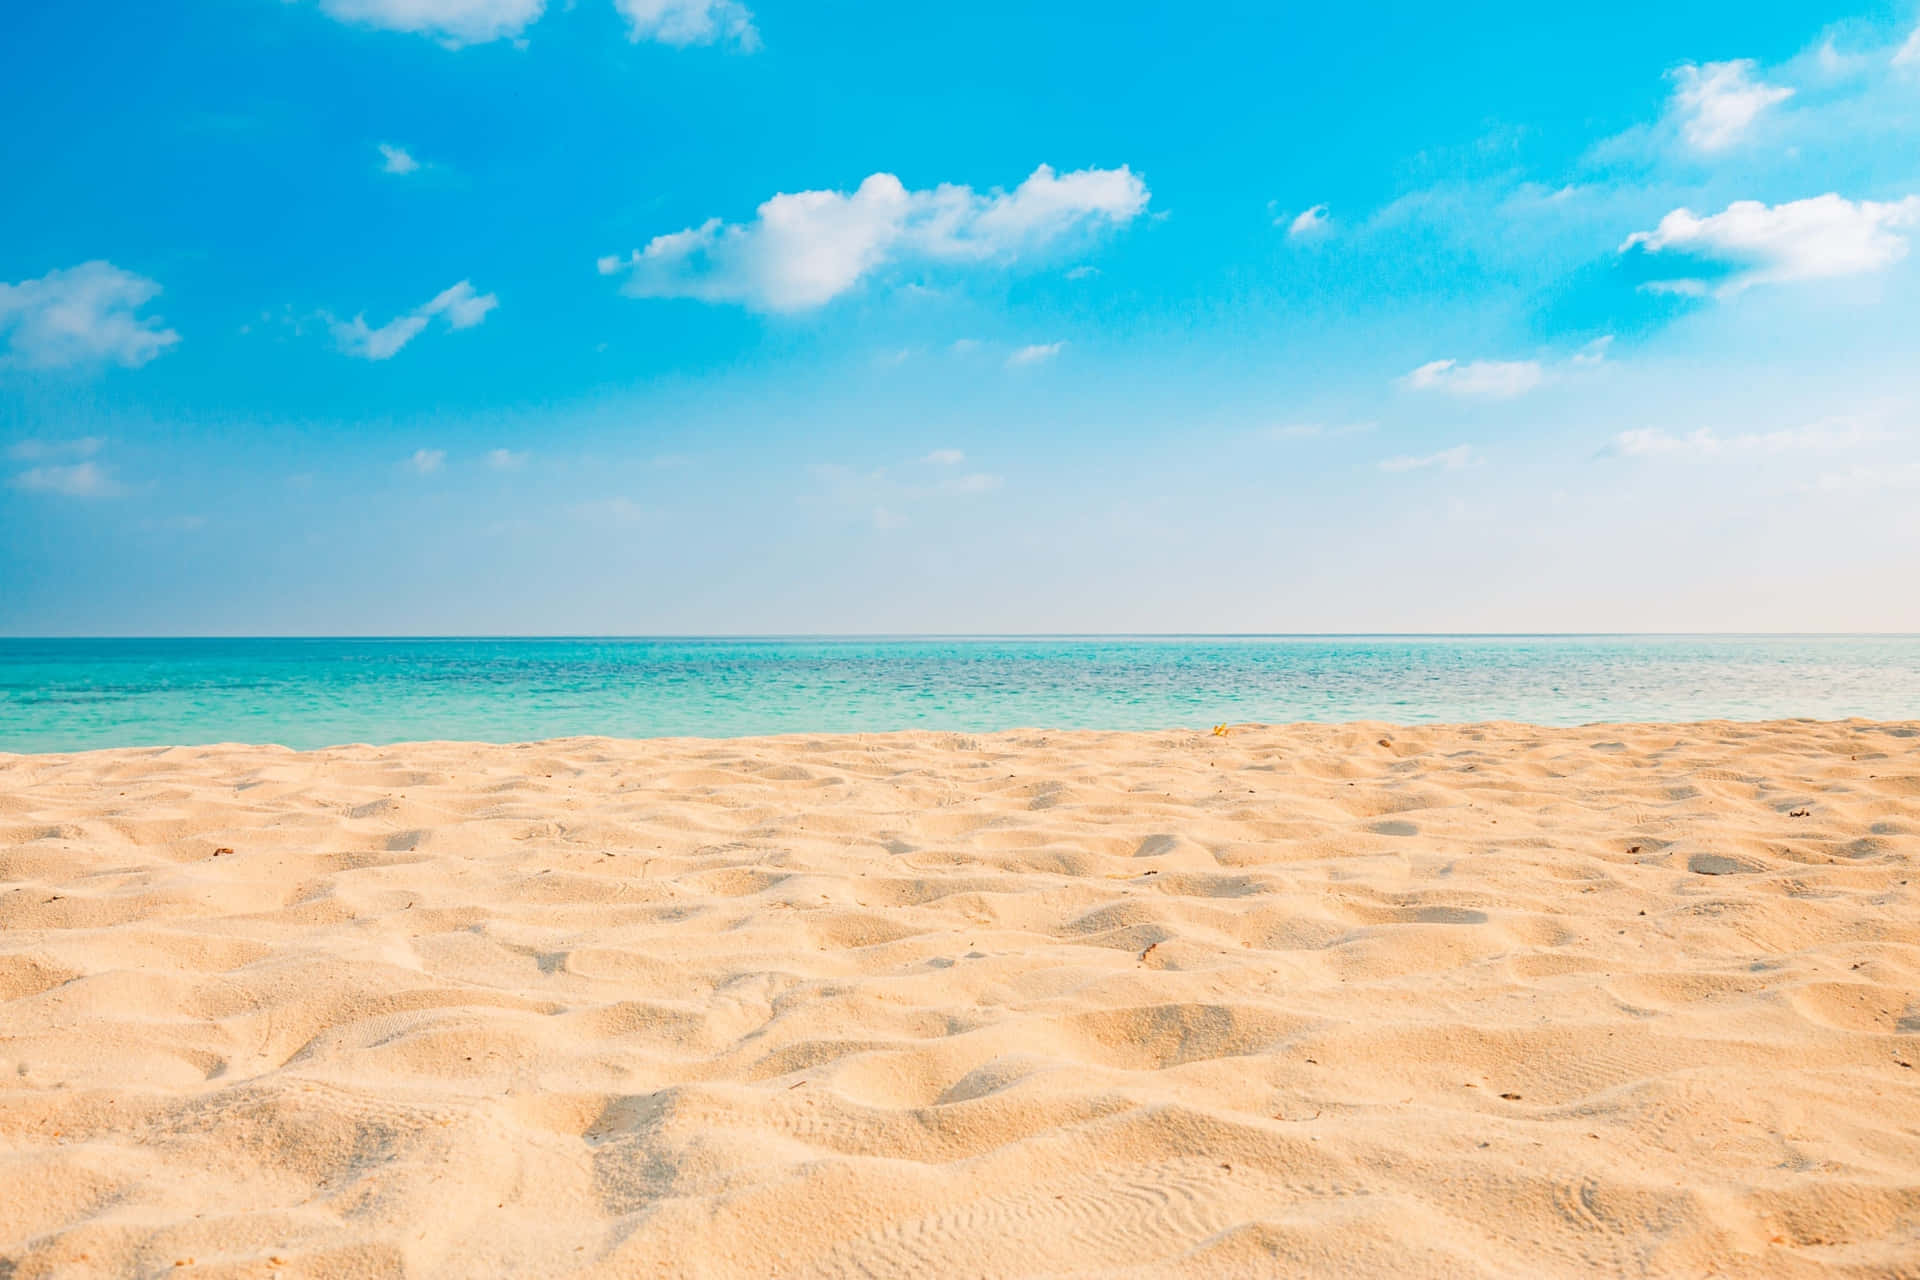 An empty beach with sand and blue sea - Sand